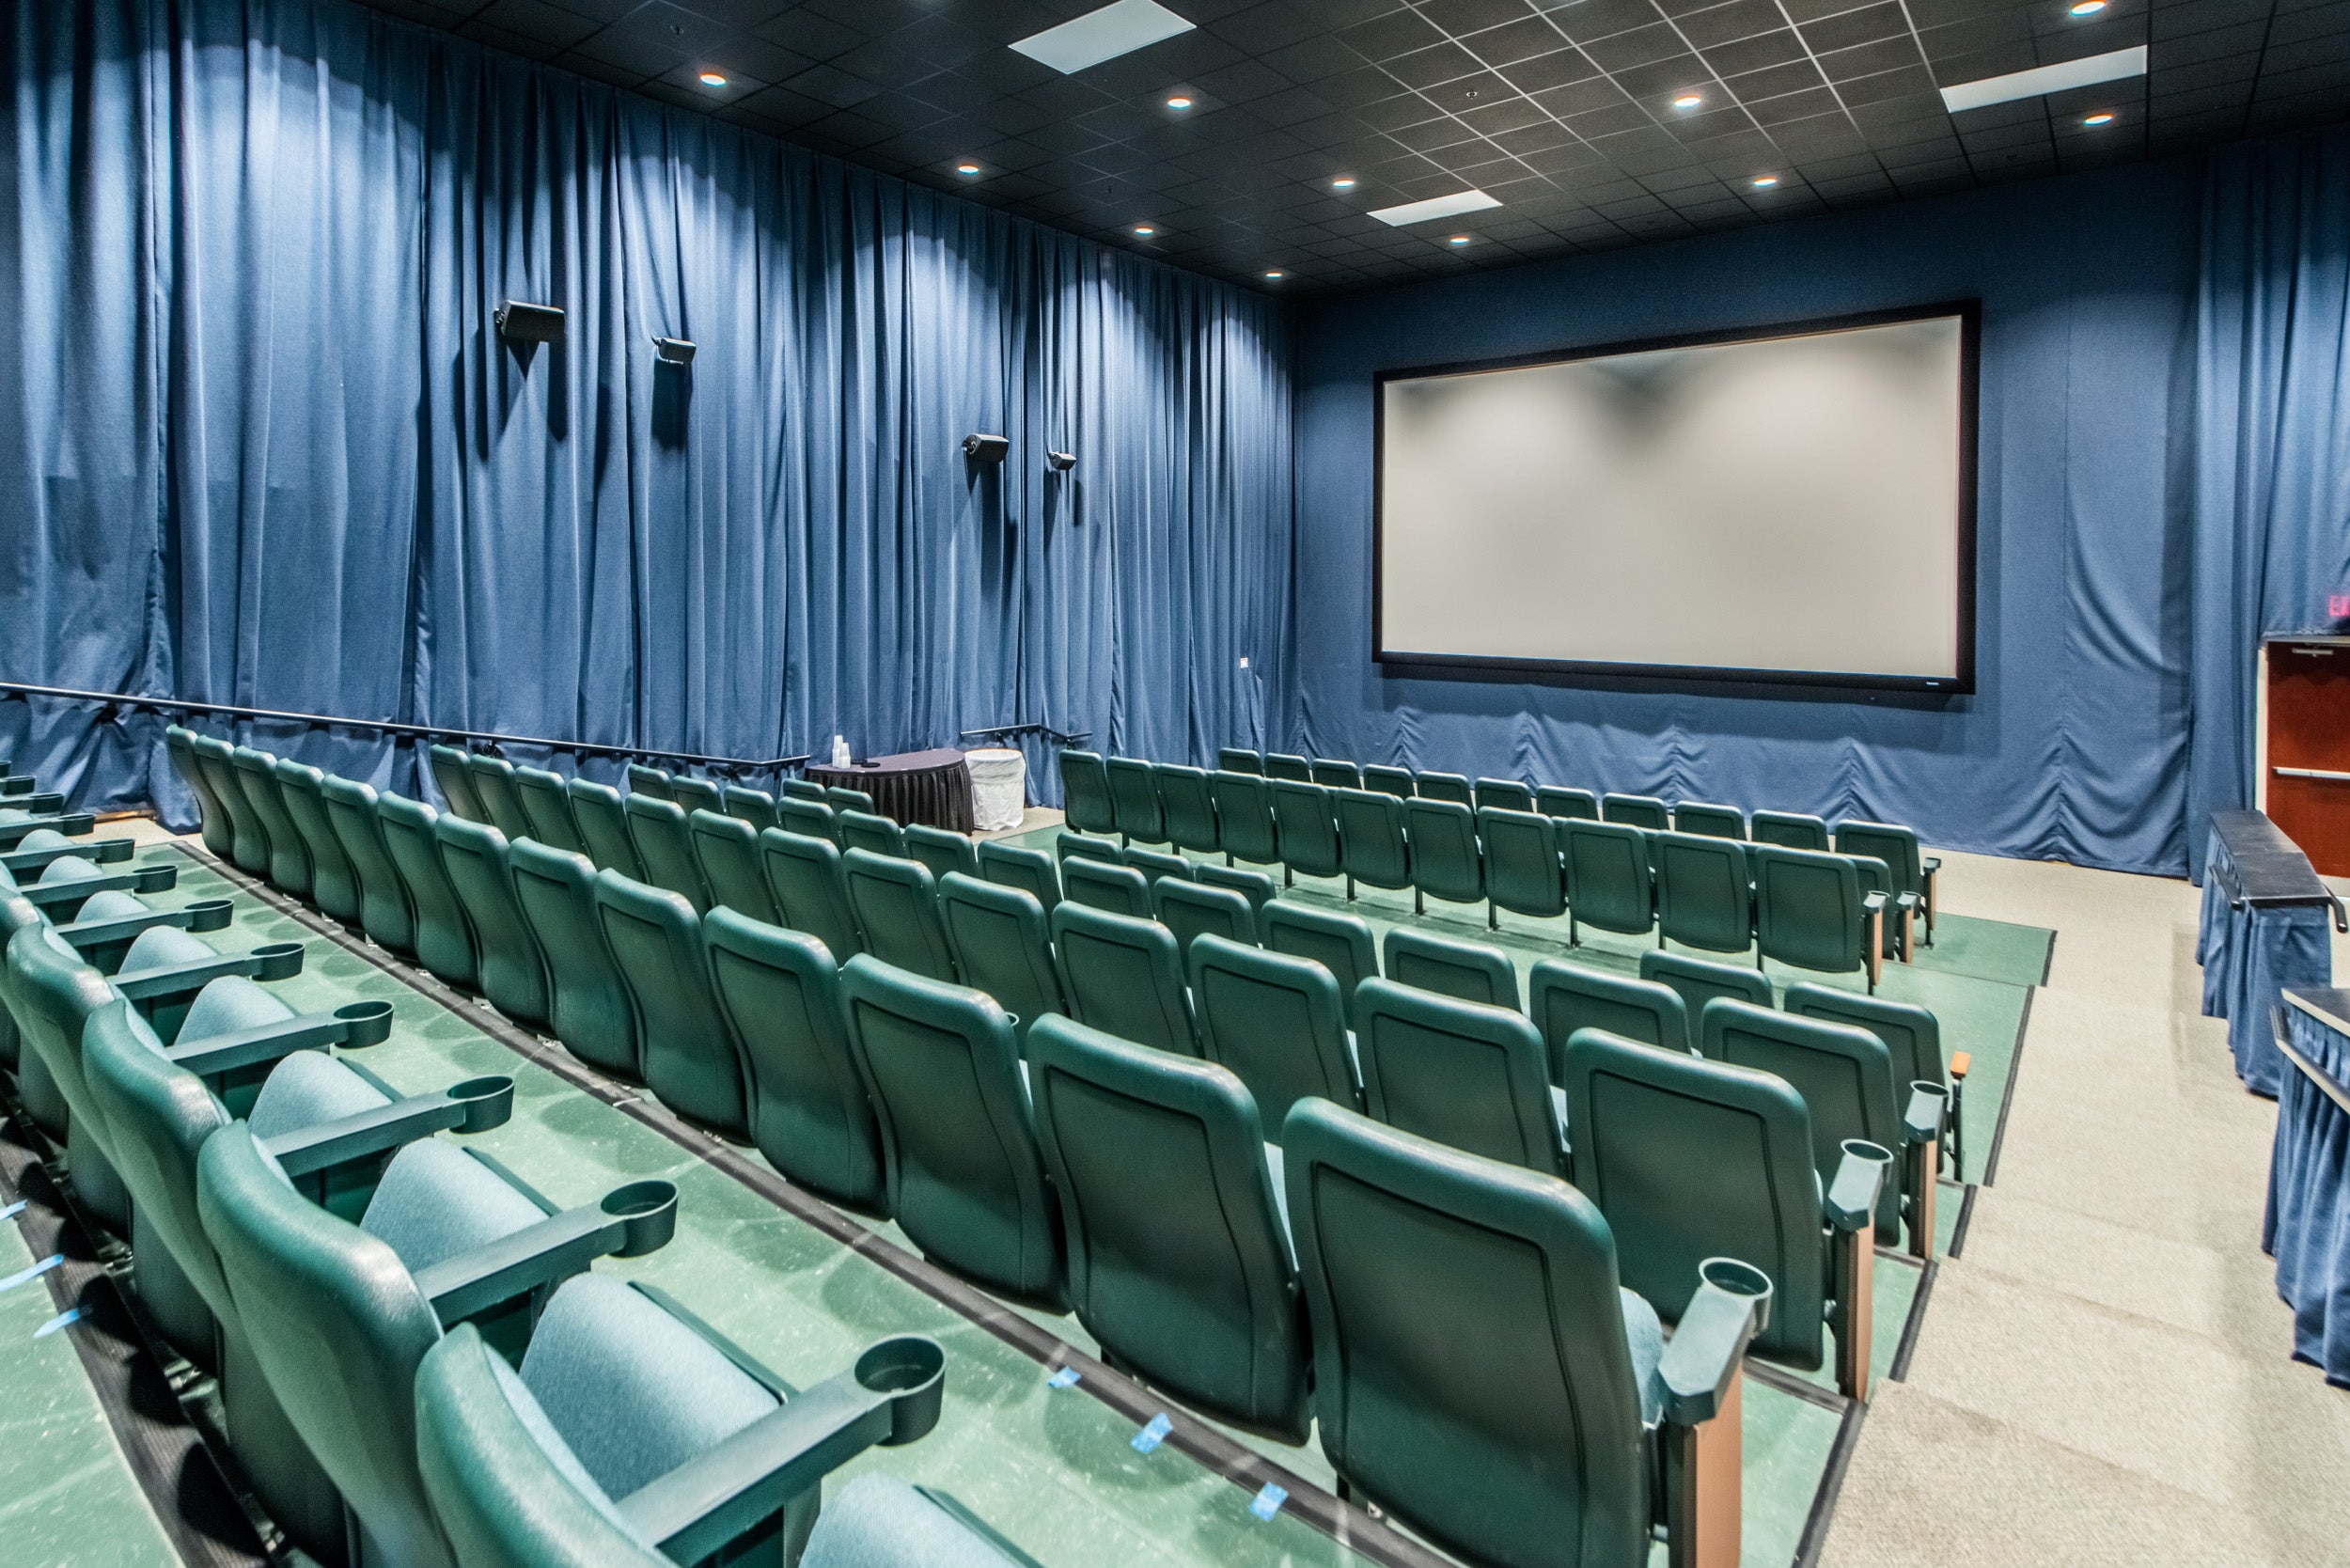 Majestic Movie Theater wstadium seating